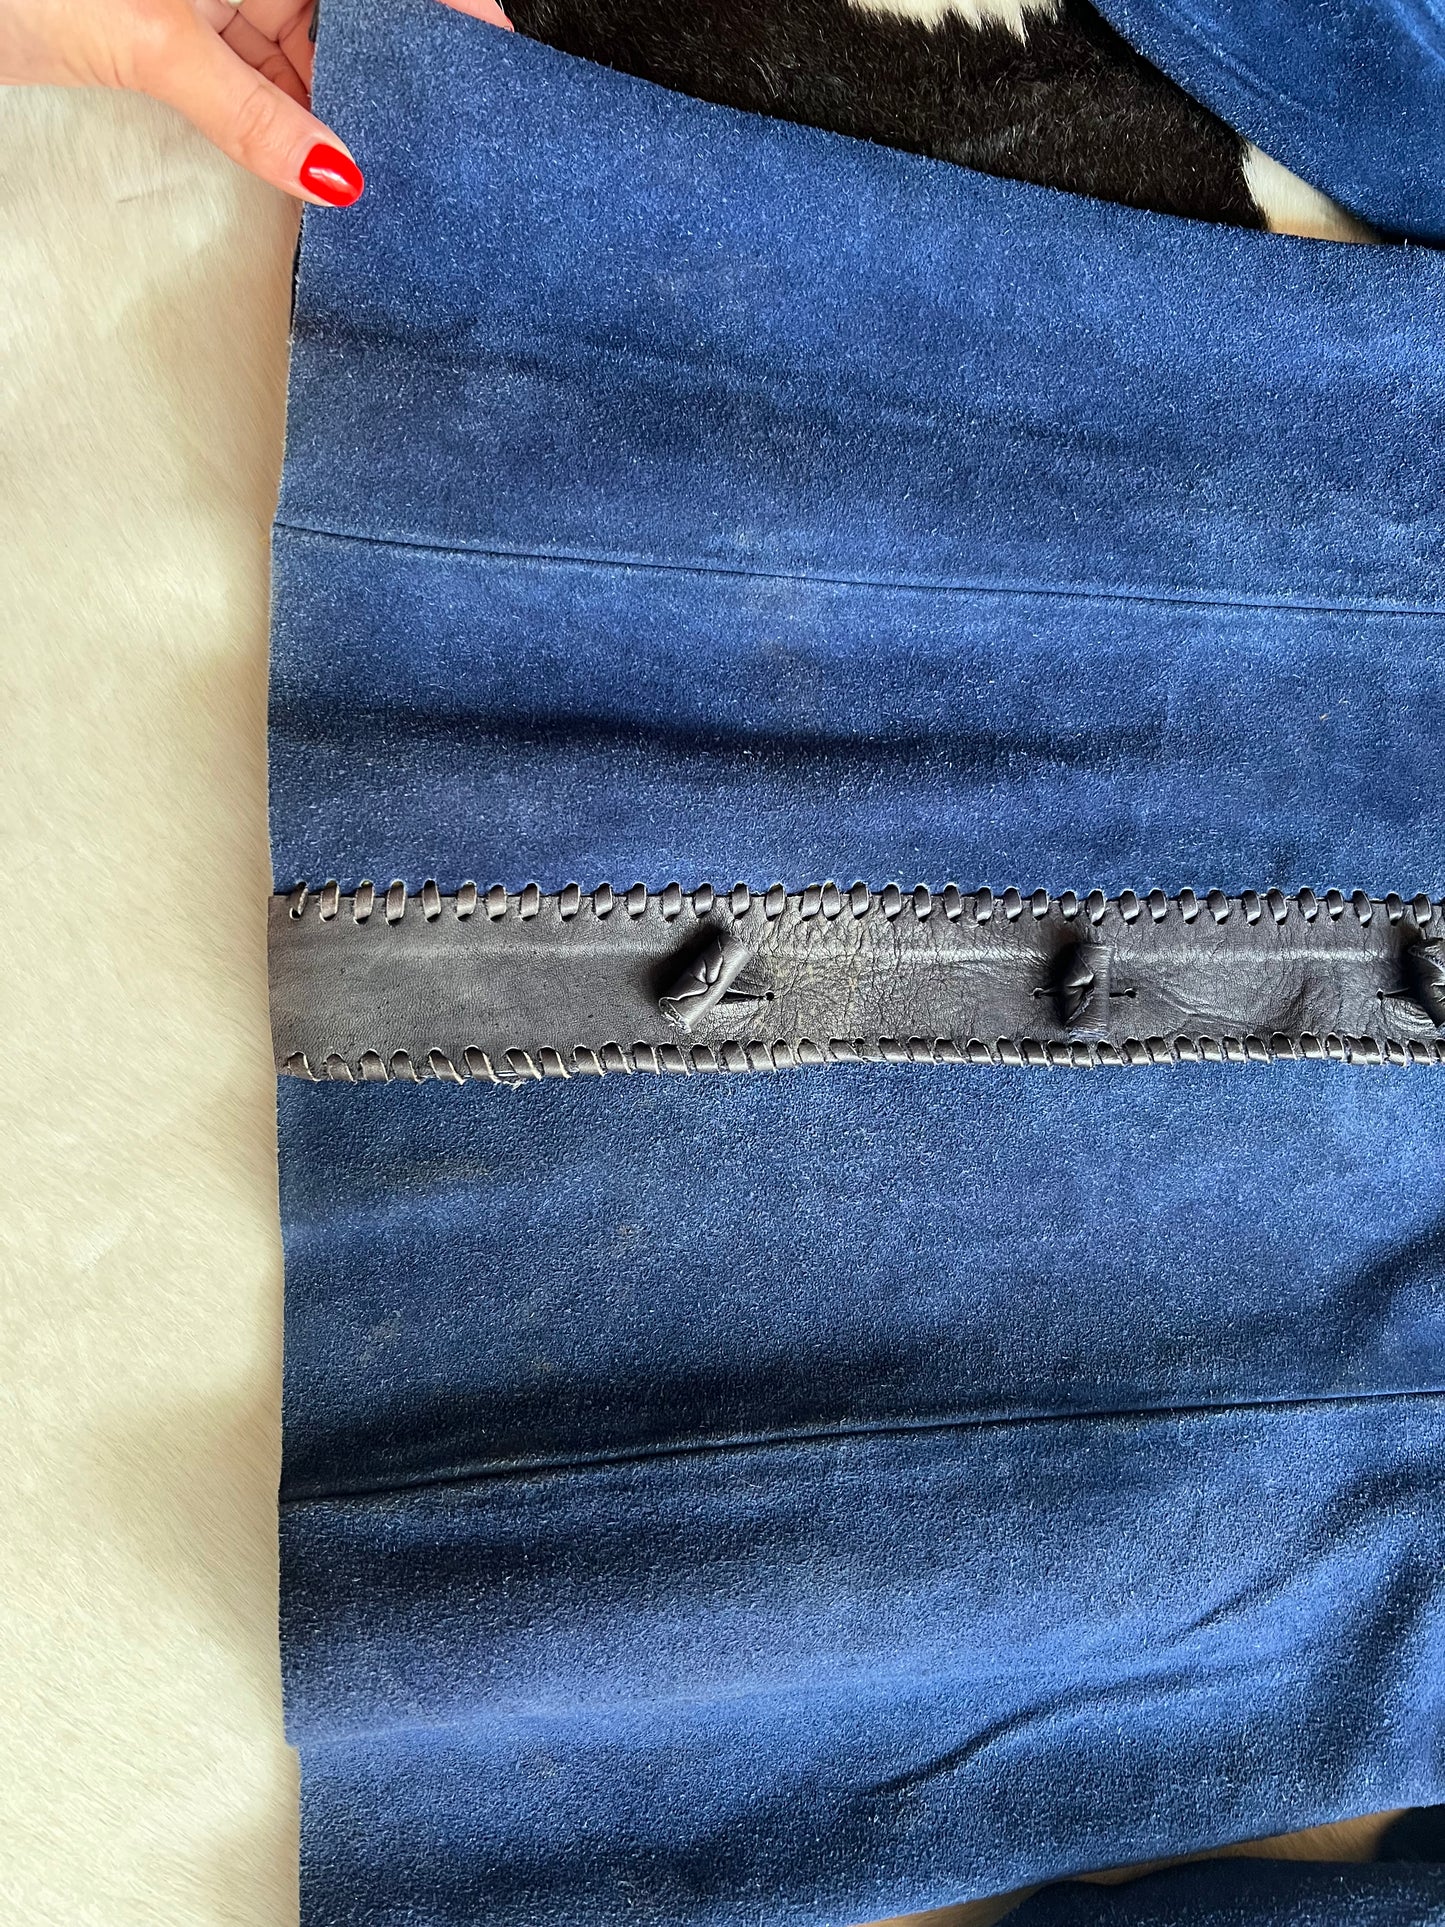 1970s CHAR blue suede jacket